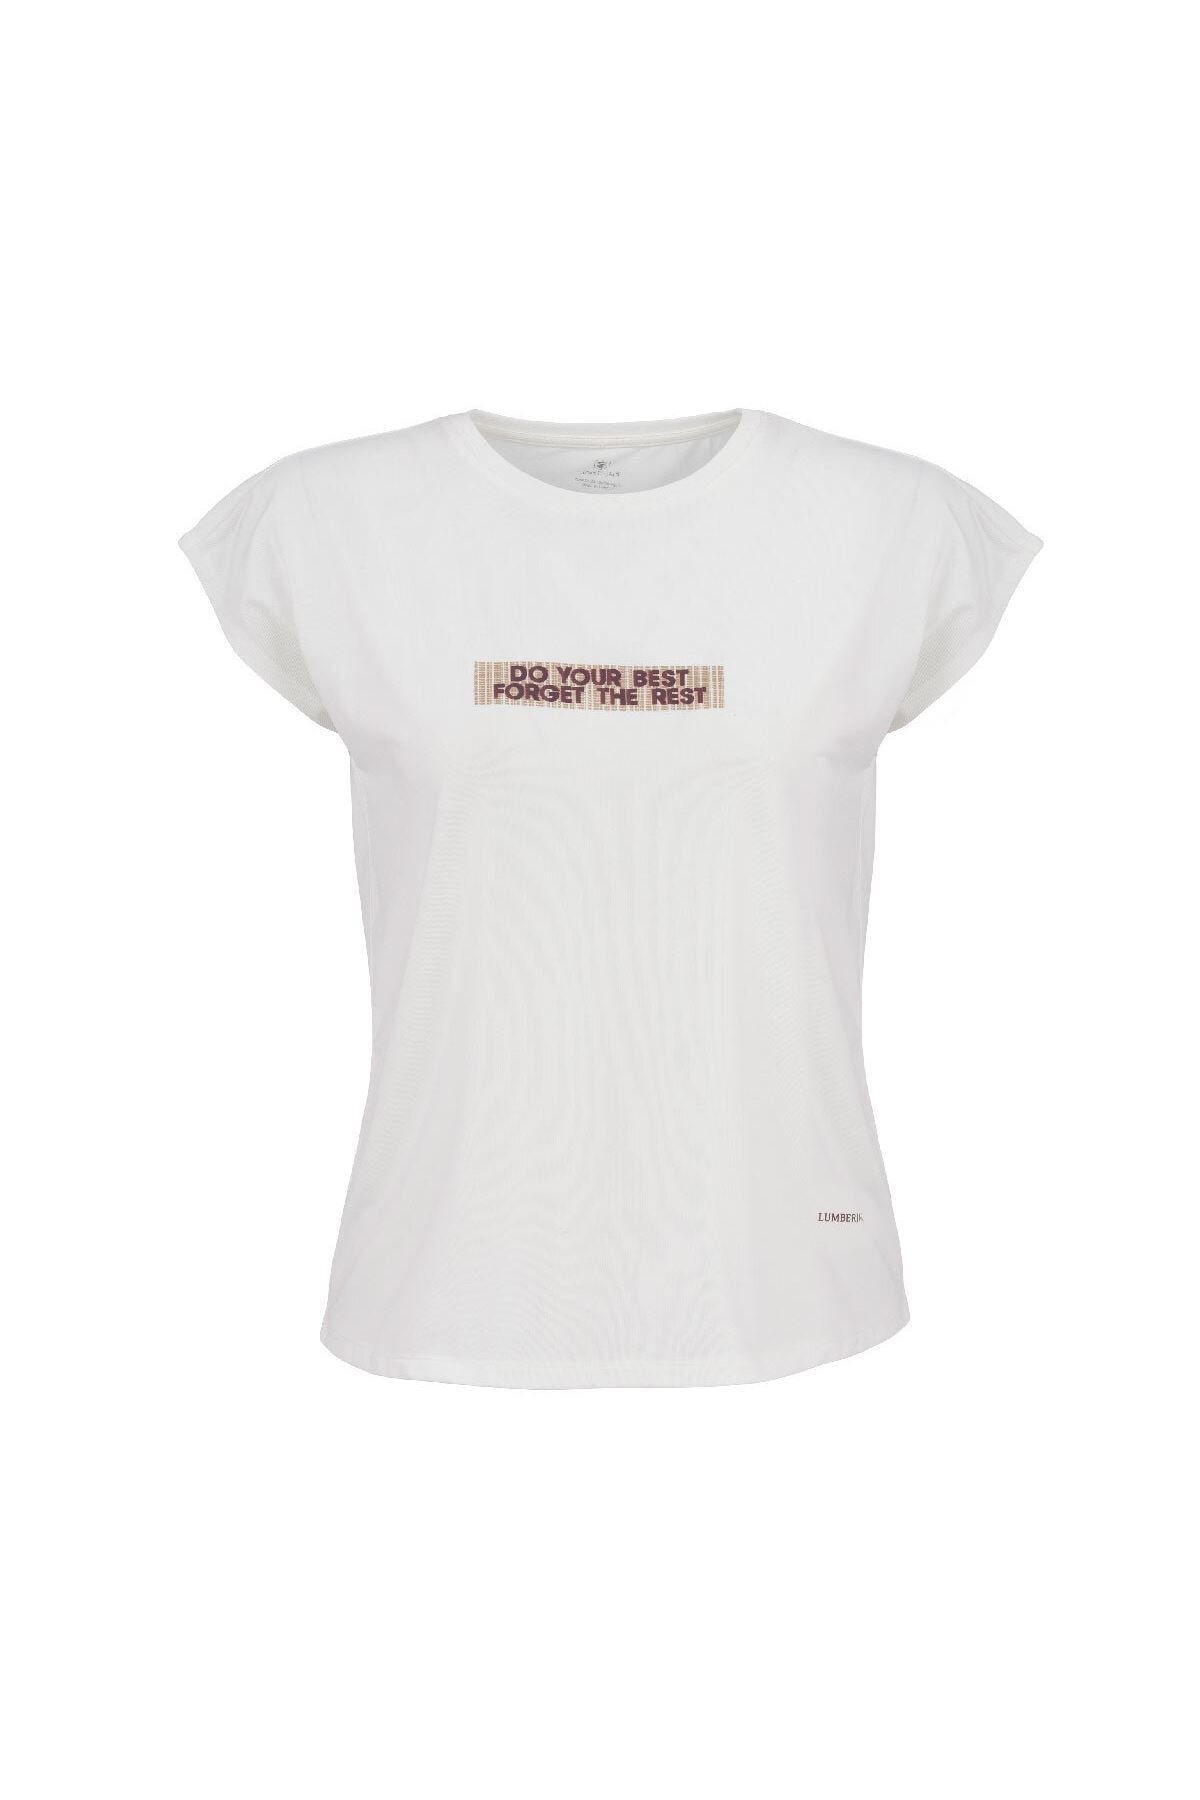 Lumberjack Ct201 Lena Slogan T-shırt Beyaz Kadın Kısa Kol T-shirt